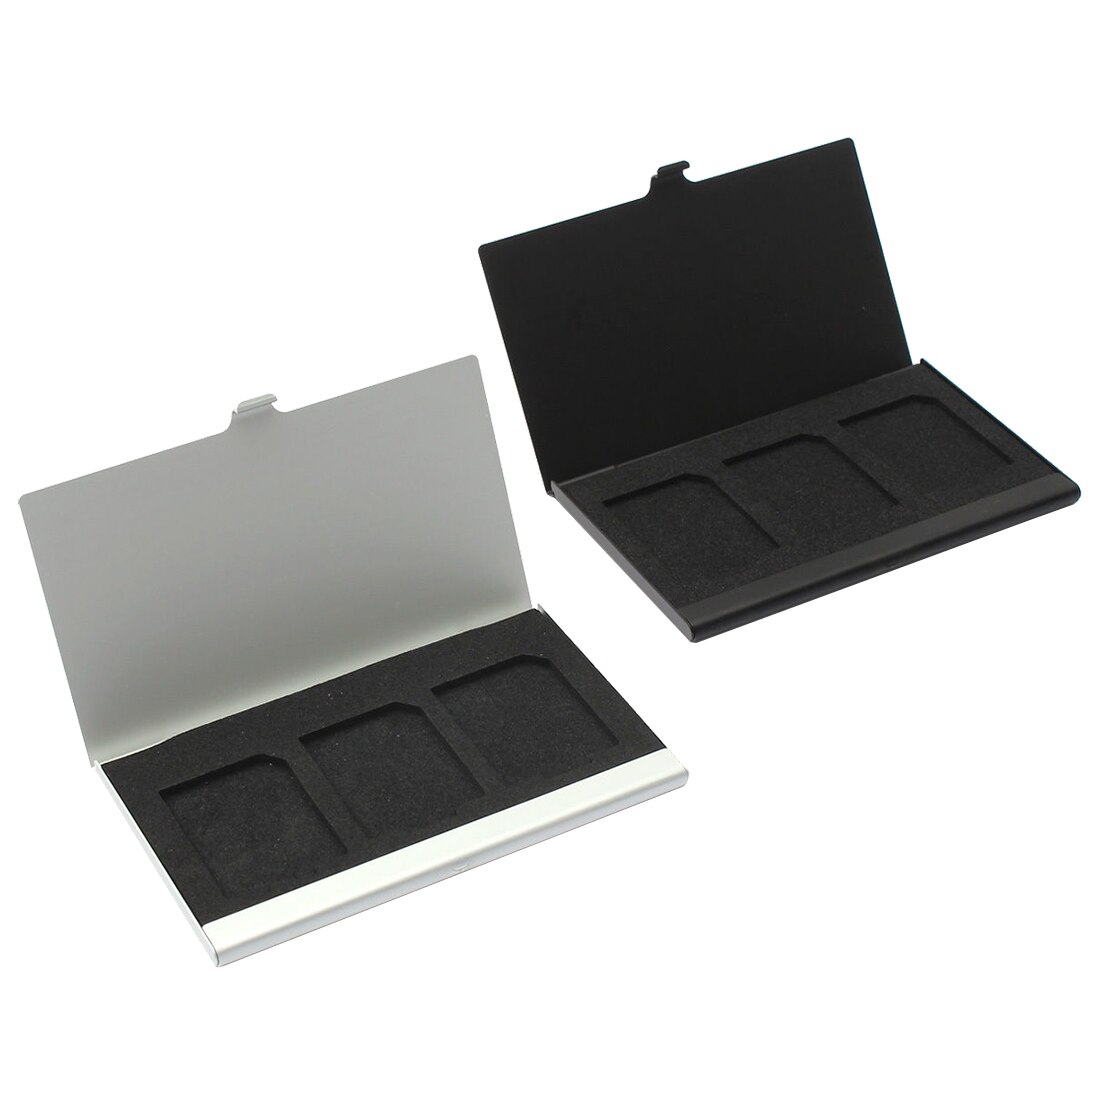 Aluminium Memory Card Case Box Houders Voor 3 Pcs Sd Kaarten